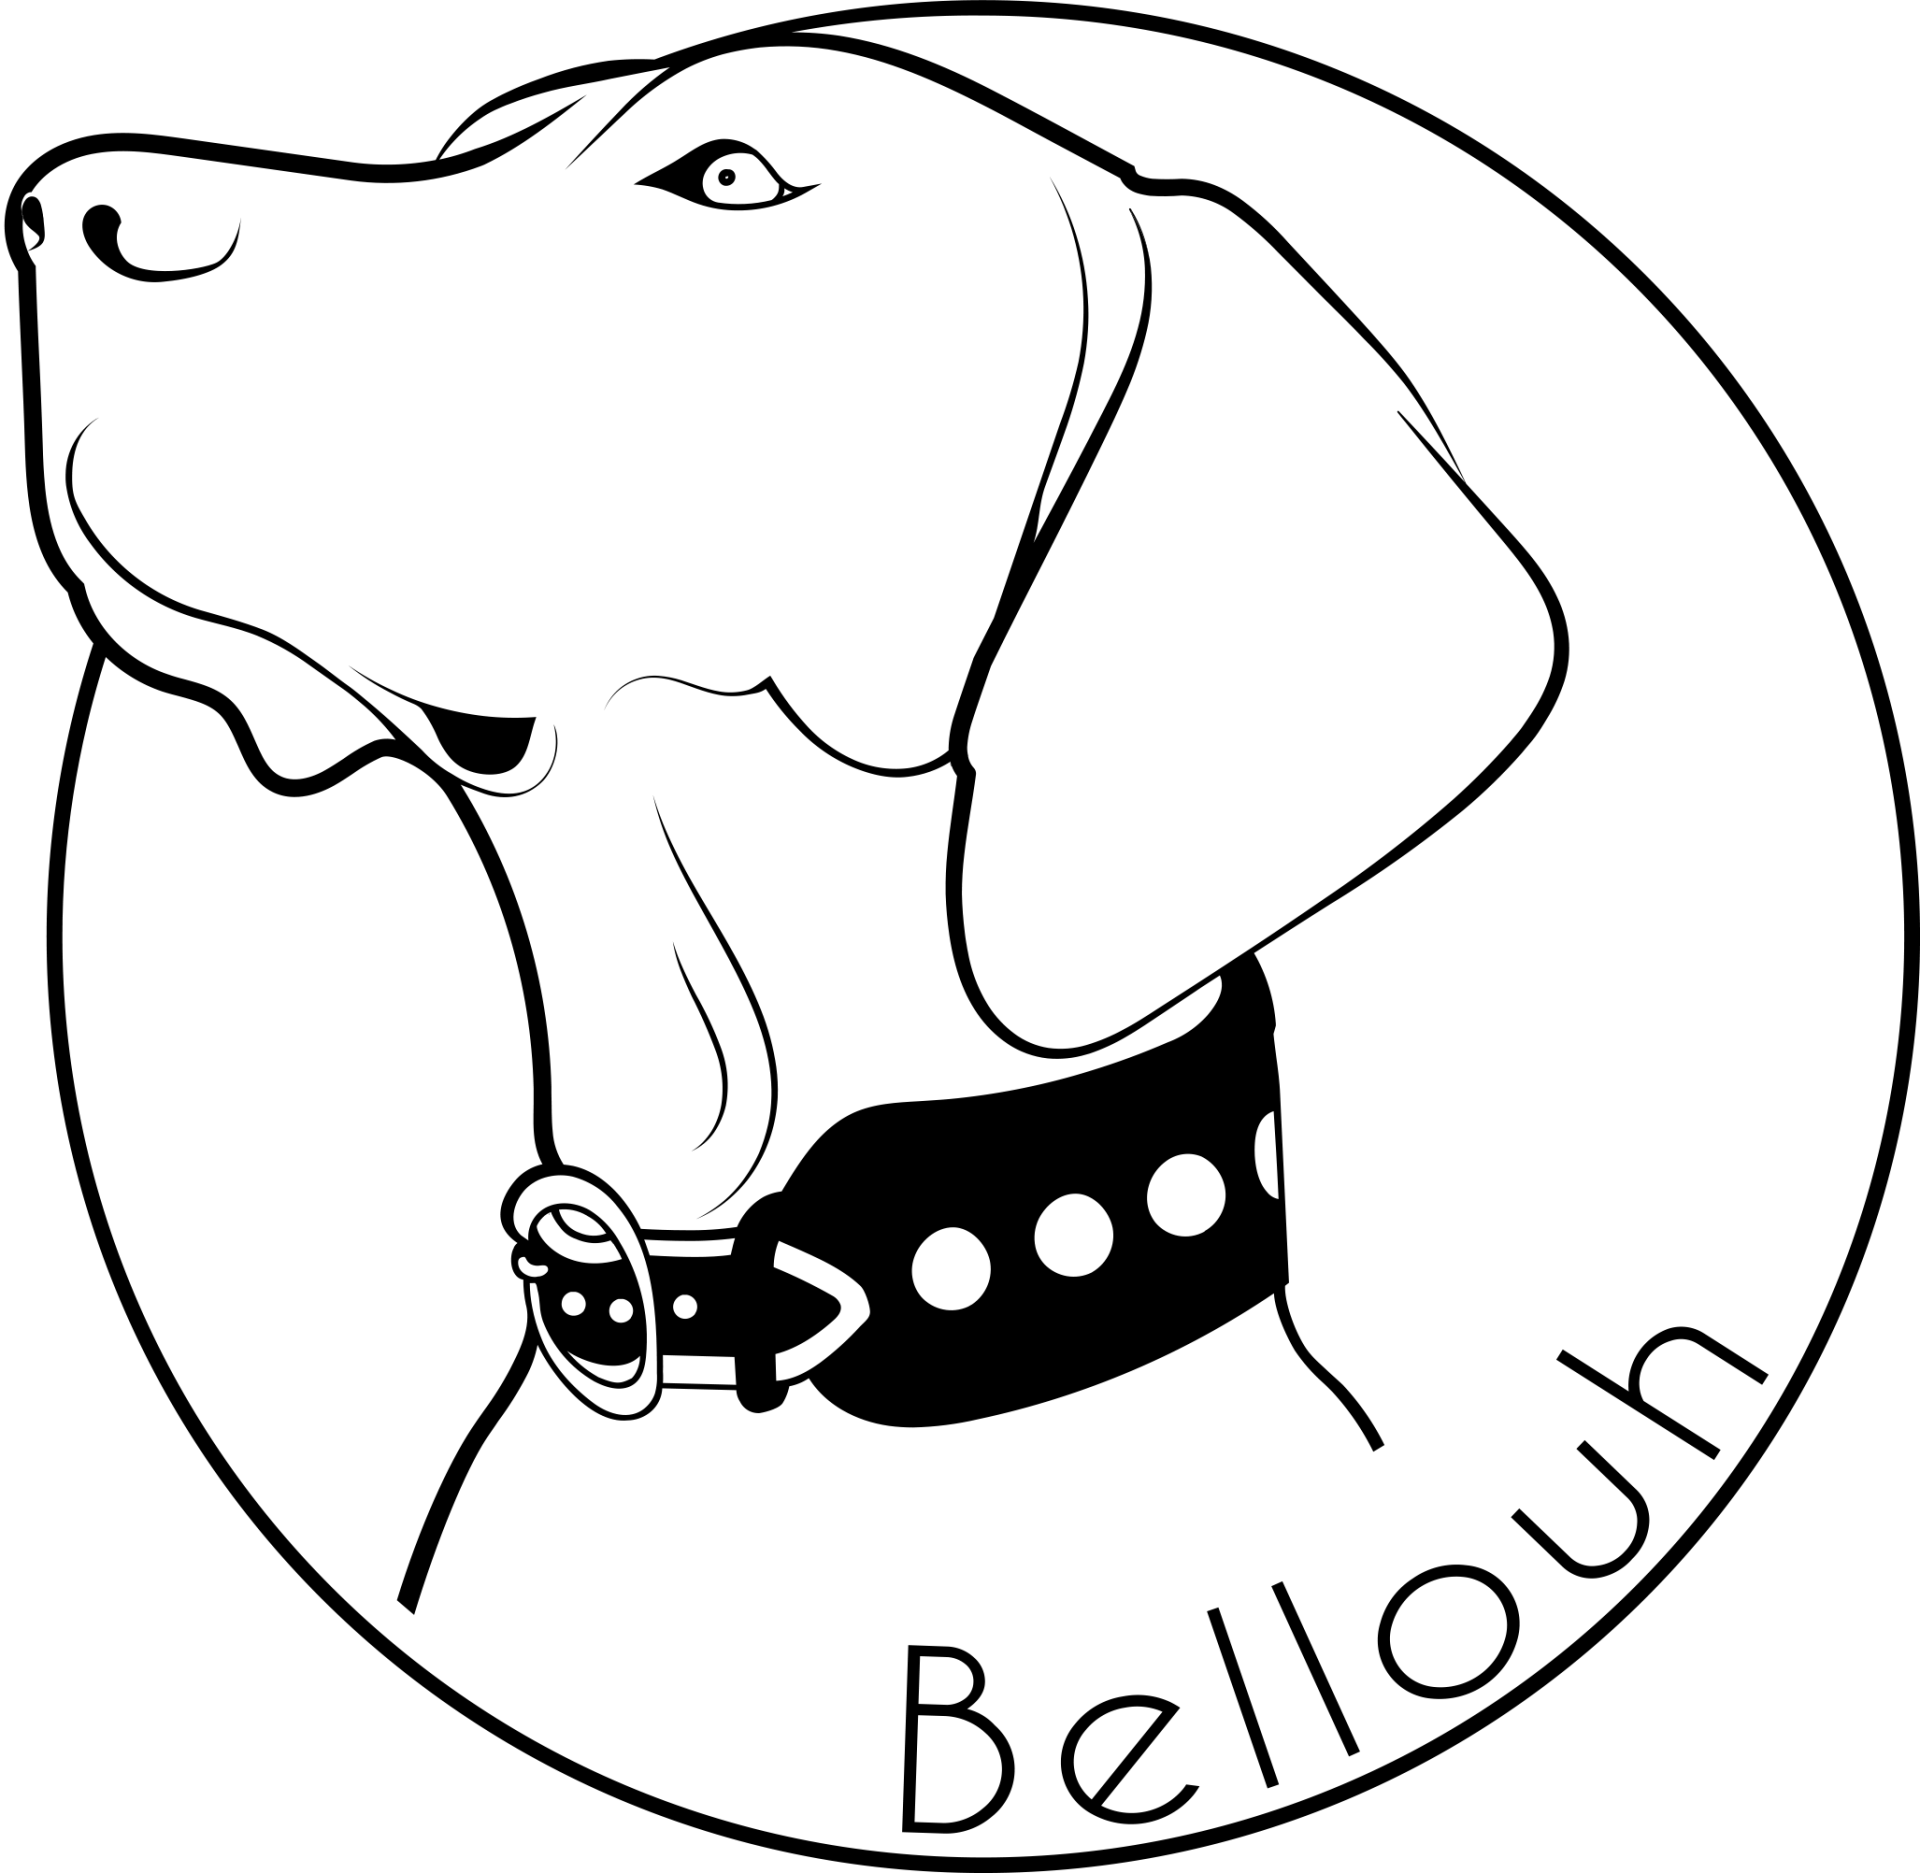 Bellouh - Hunde Halsbänder, Leinen, Anhänger, Schmuck, Taschen, Gürtel